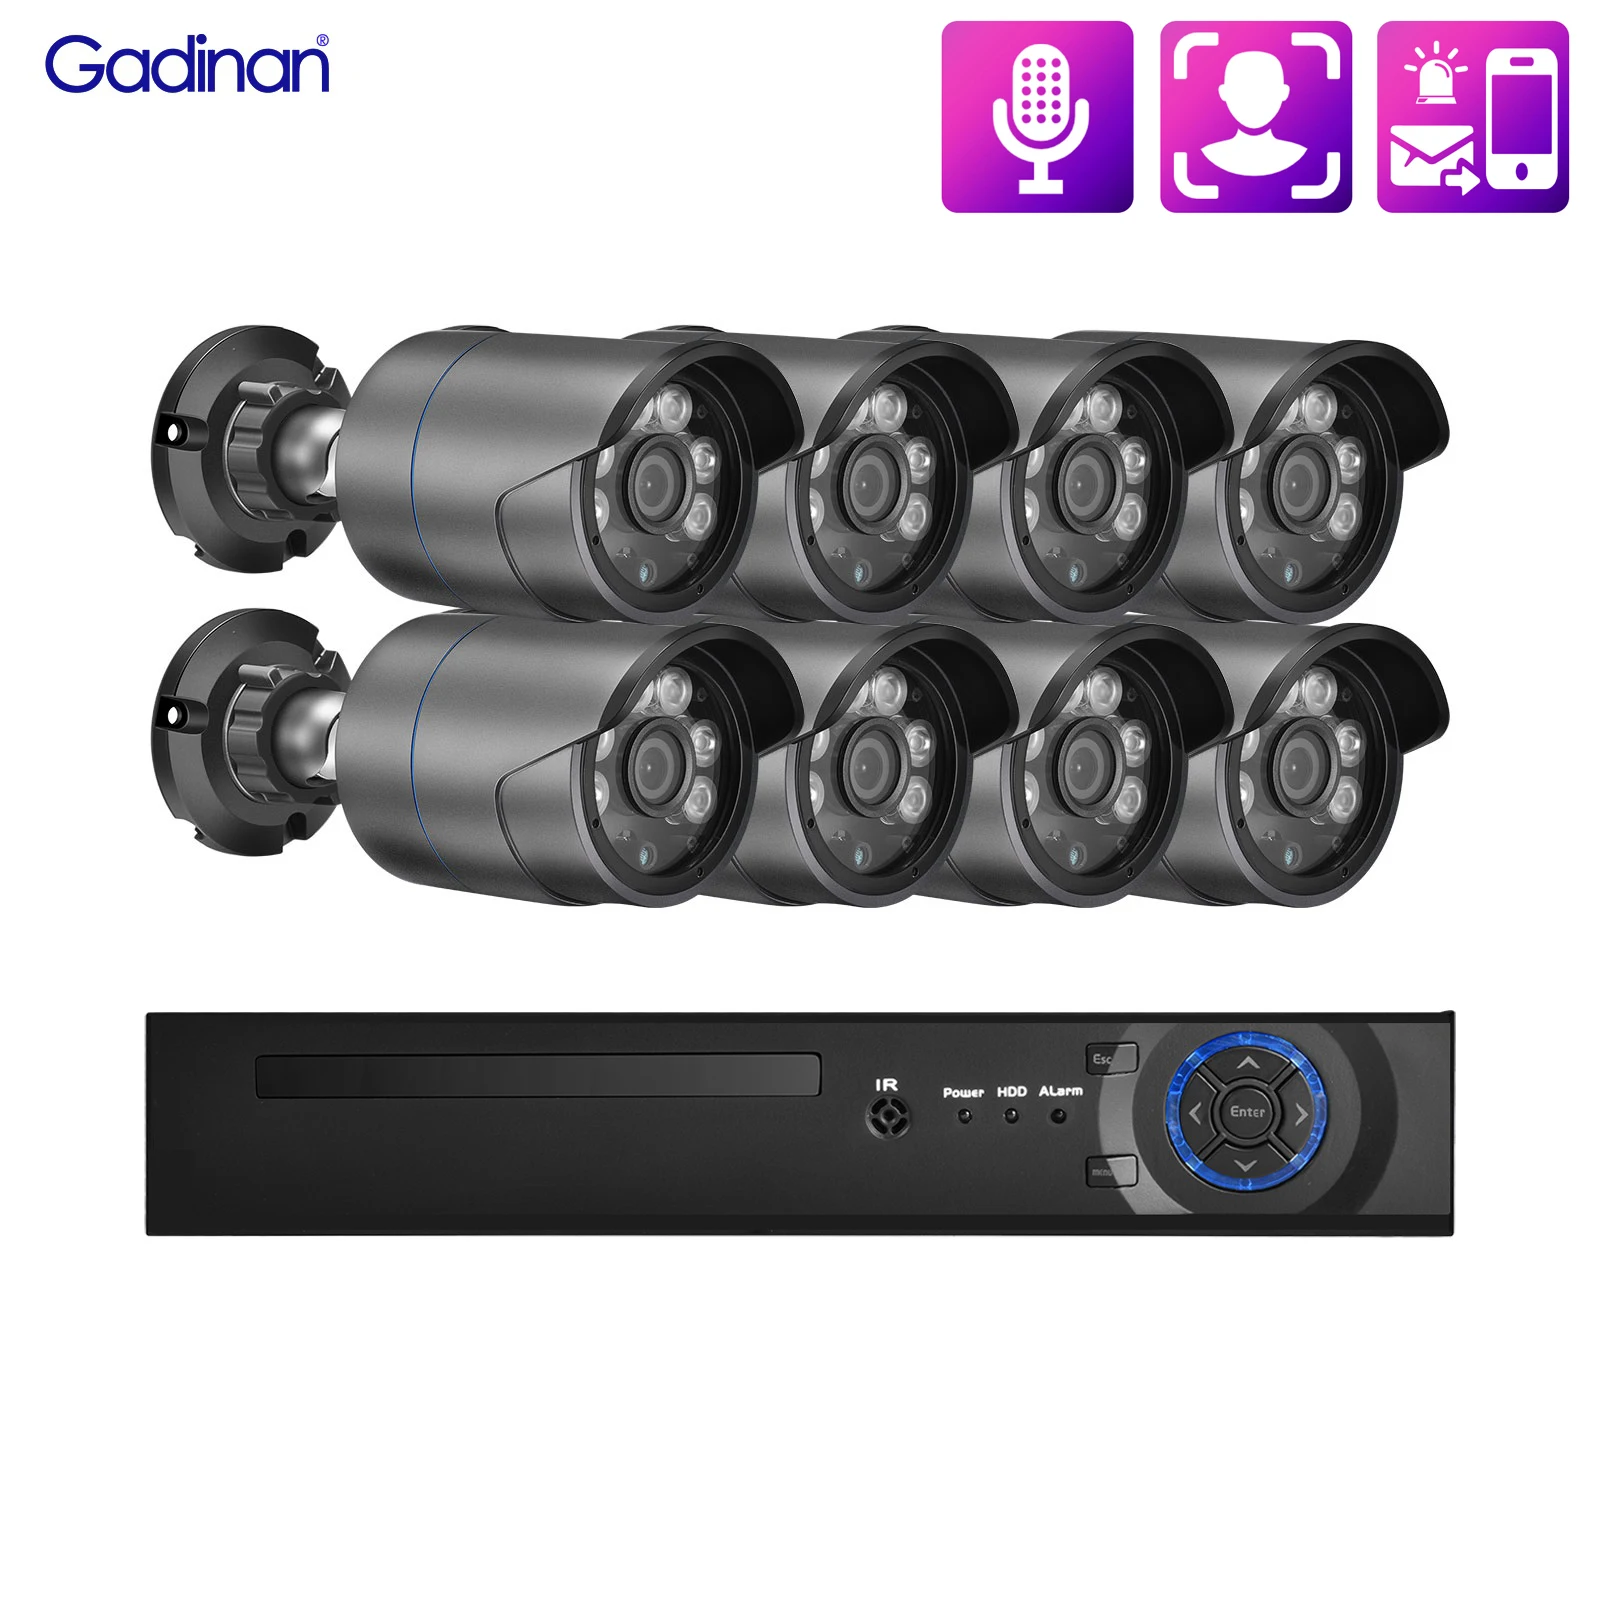 

Gadinan H.265+ POE NVR IP Camera 8CH 4K Color Night Vision Outdoor Audio Security Video Surveillance Kit Human Detection CCTV